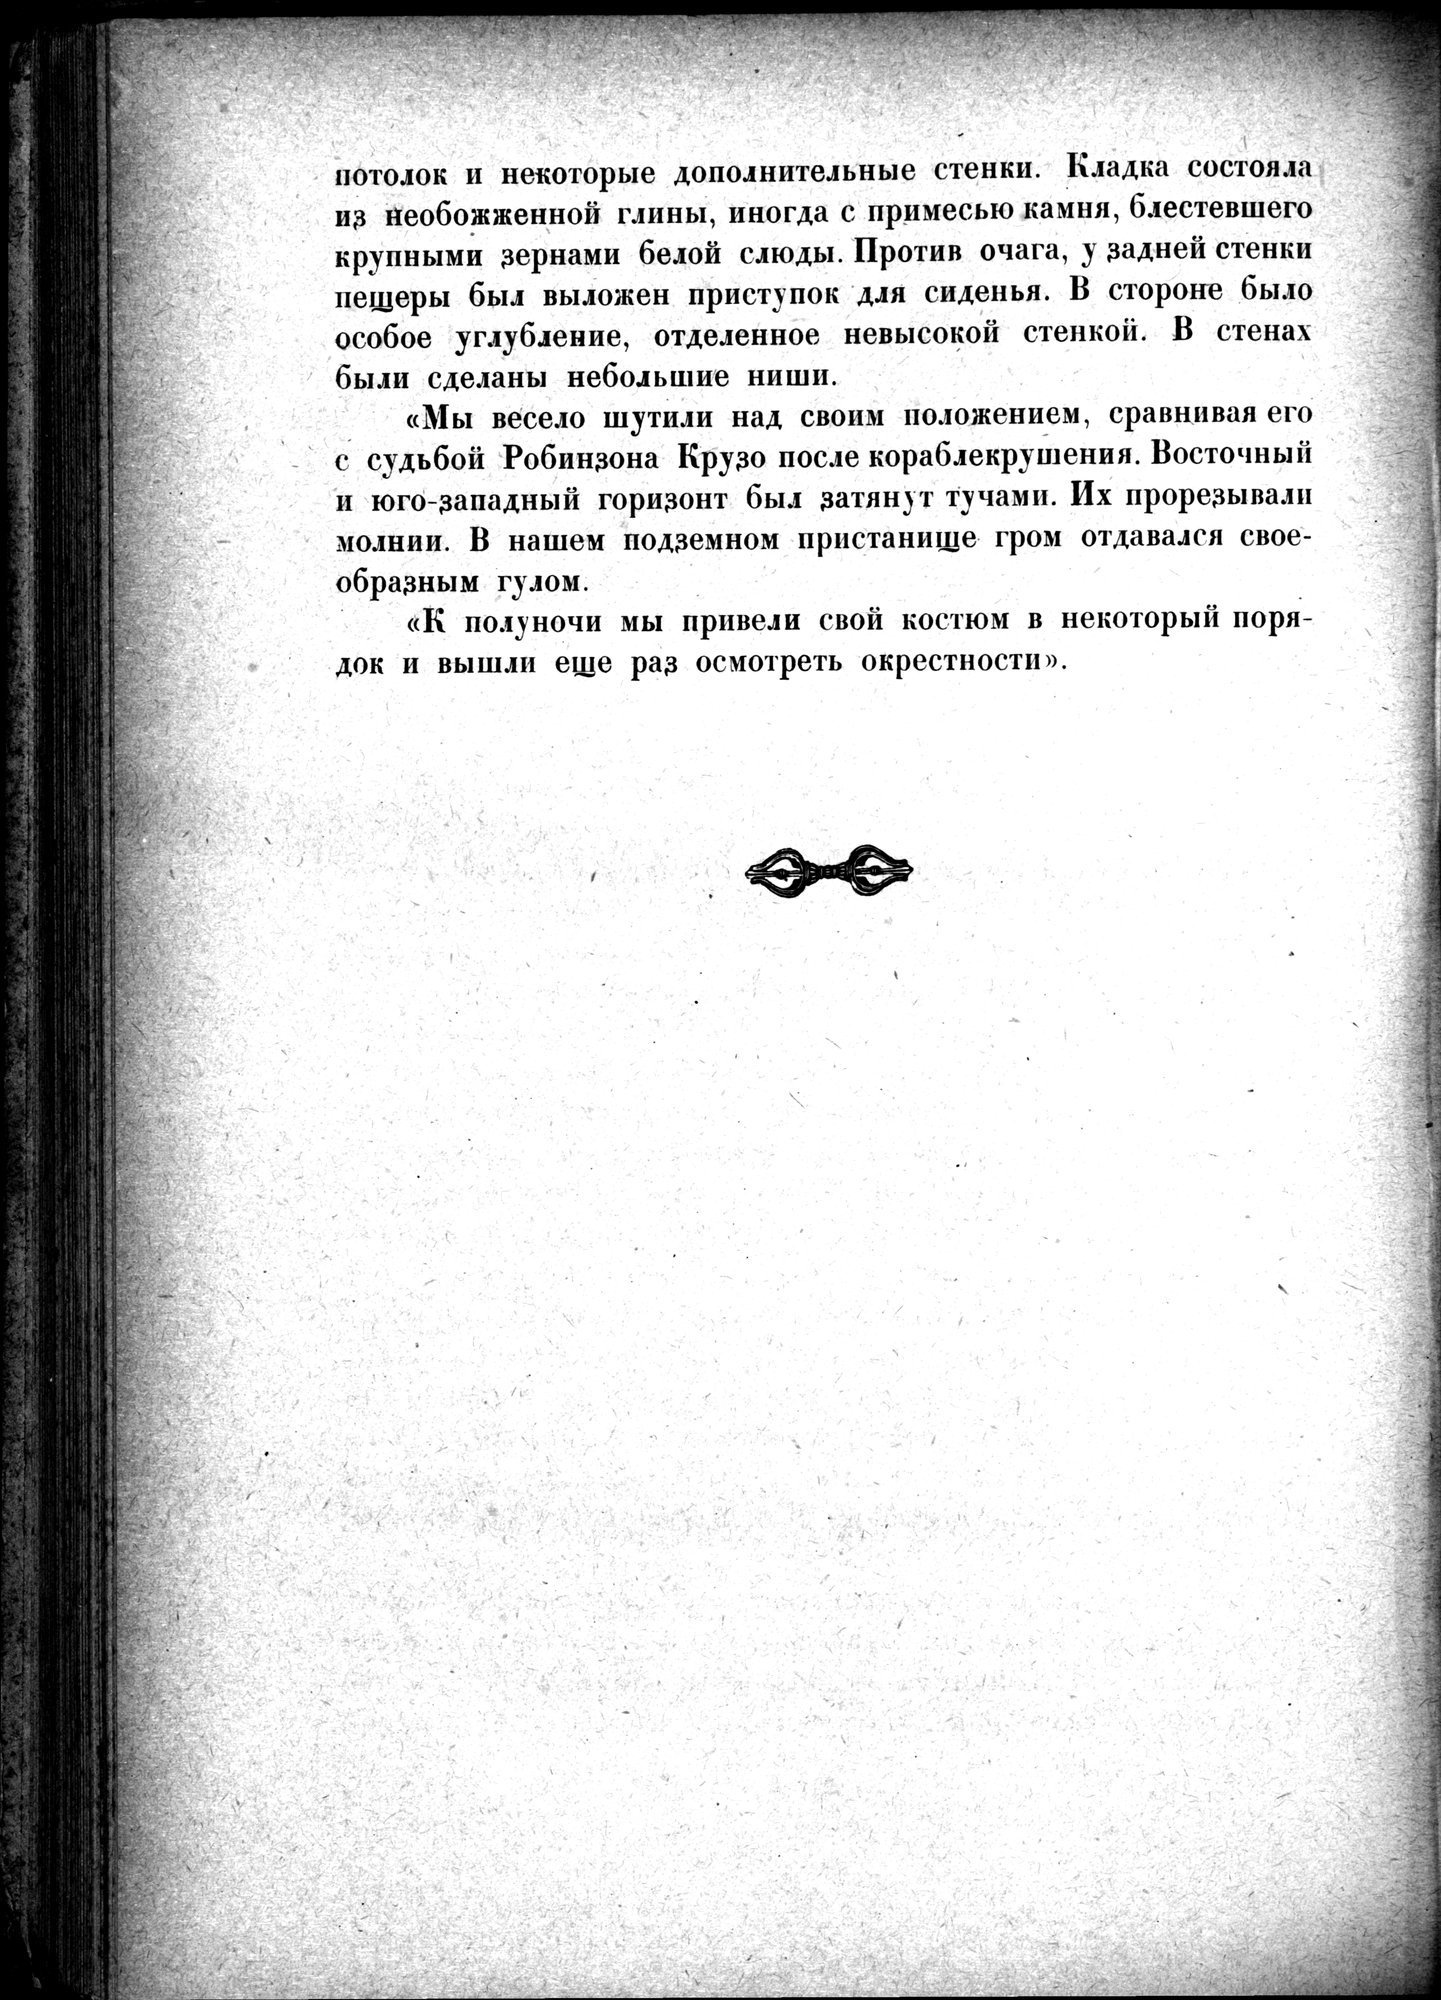 Mongoliya i Amdo i mertby gorod Khara-Khoto : vol.1 / Page 384 (Grayscale High Resolution Image)